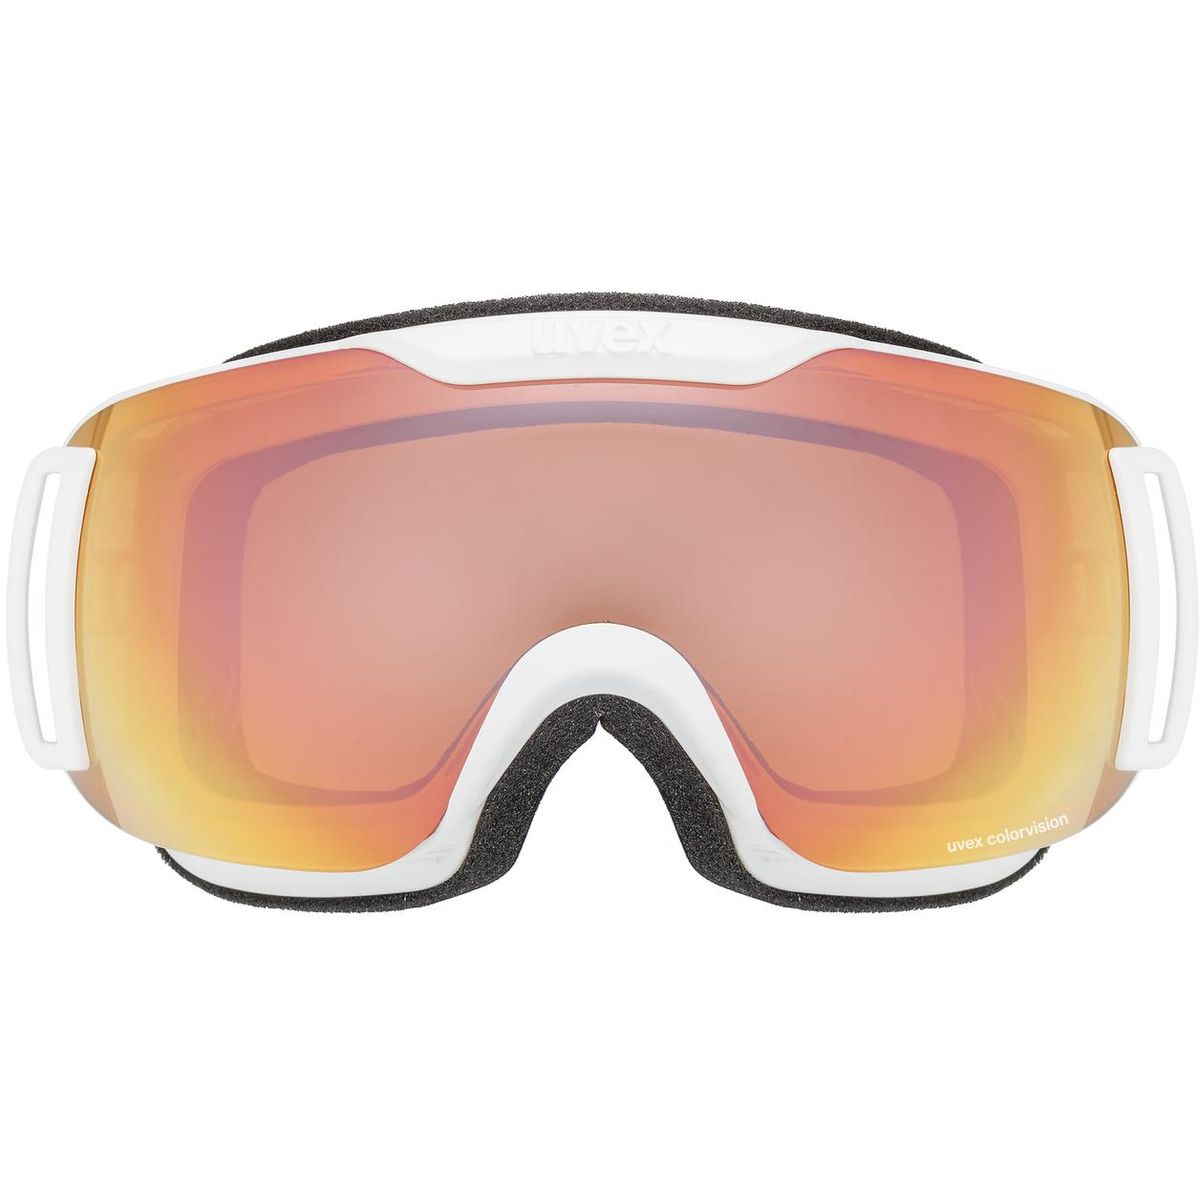 Uvex Downhill 2000 S Cv Skibrille